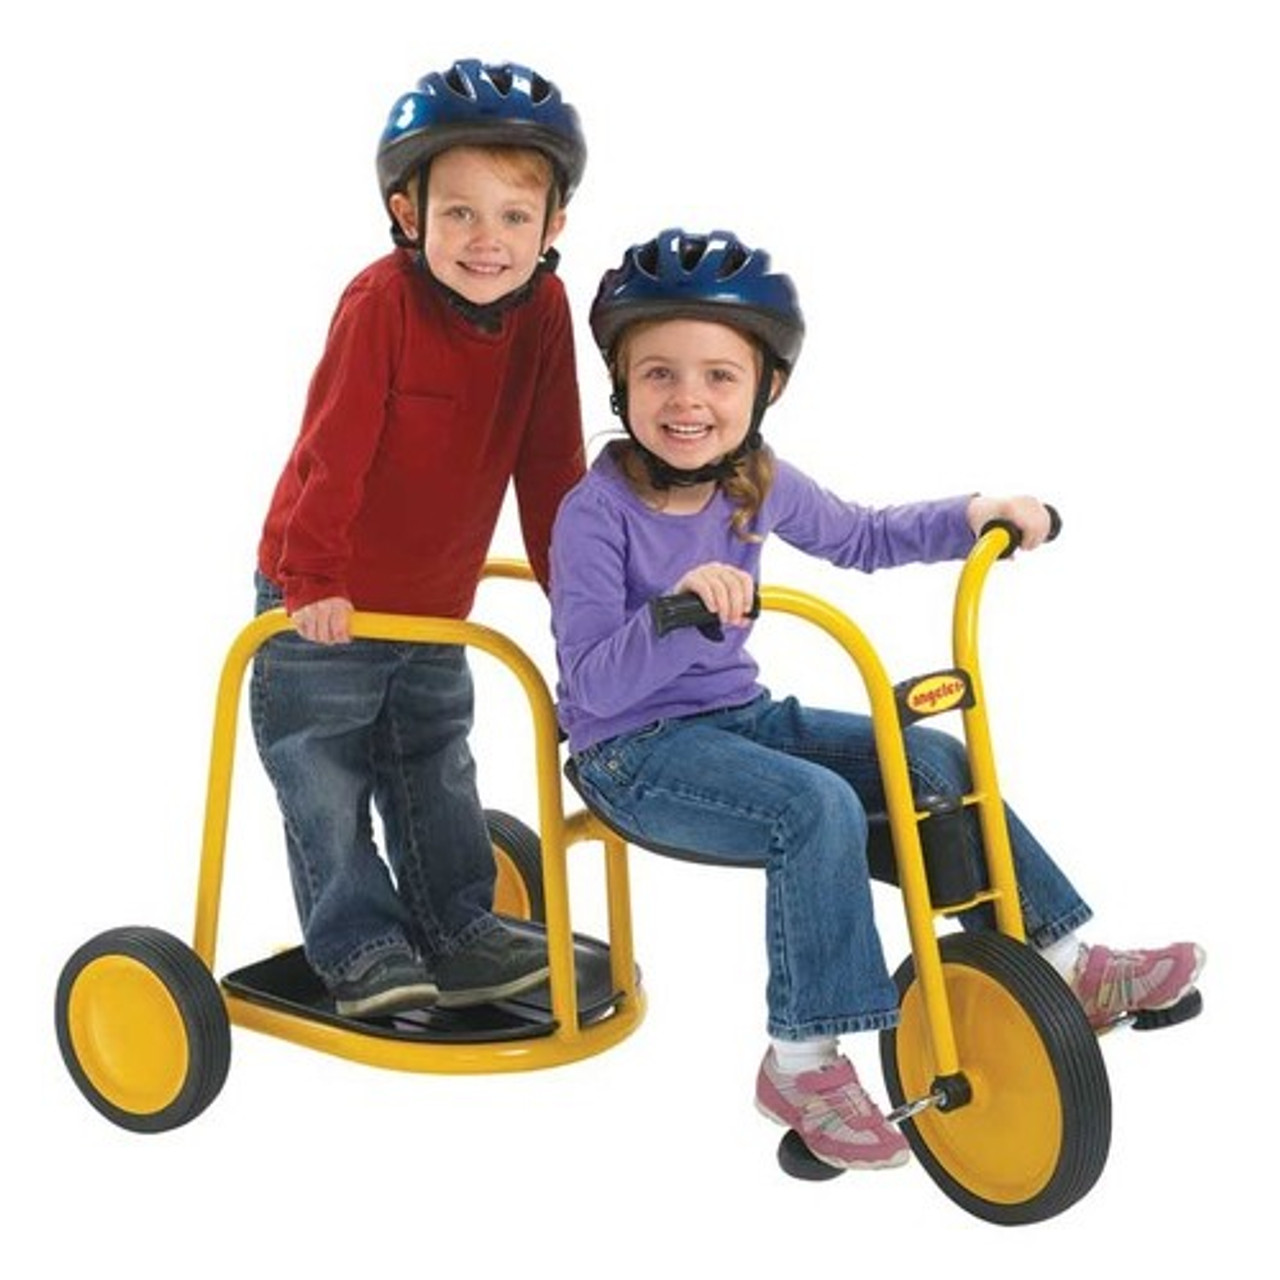 Children's Factory MyRider® Chariot Bike | NoahsPlay.com